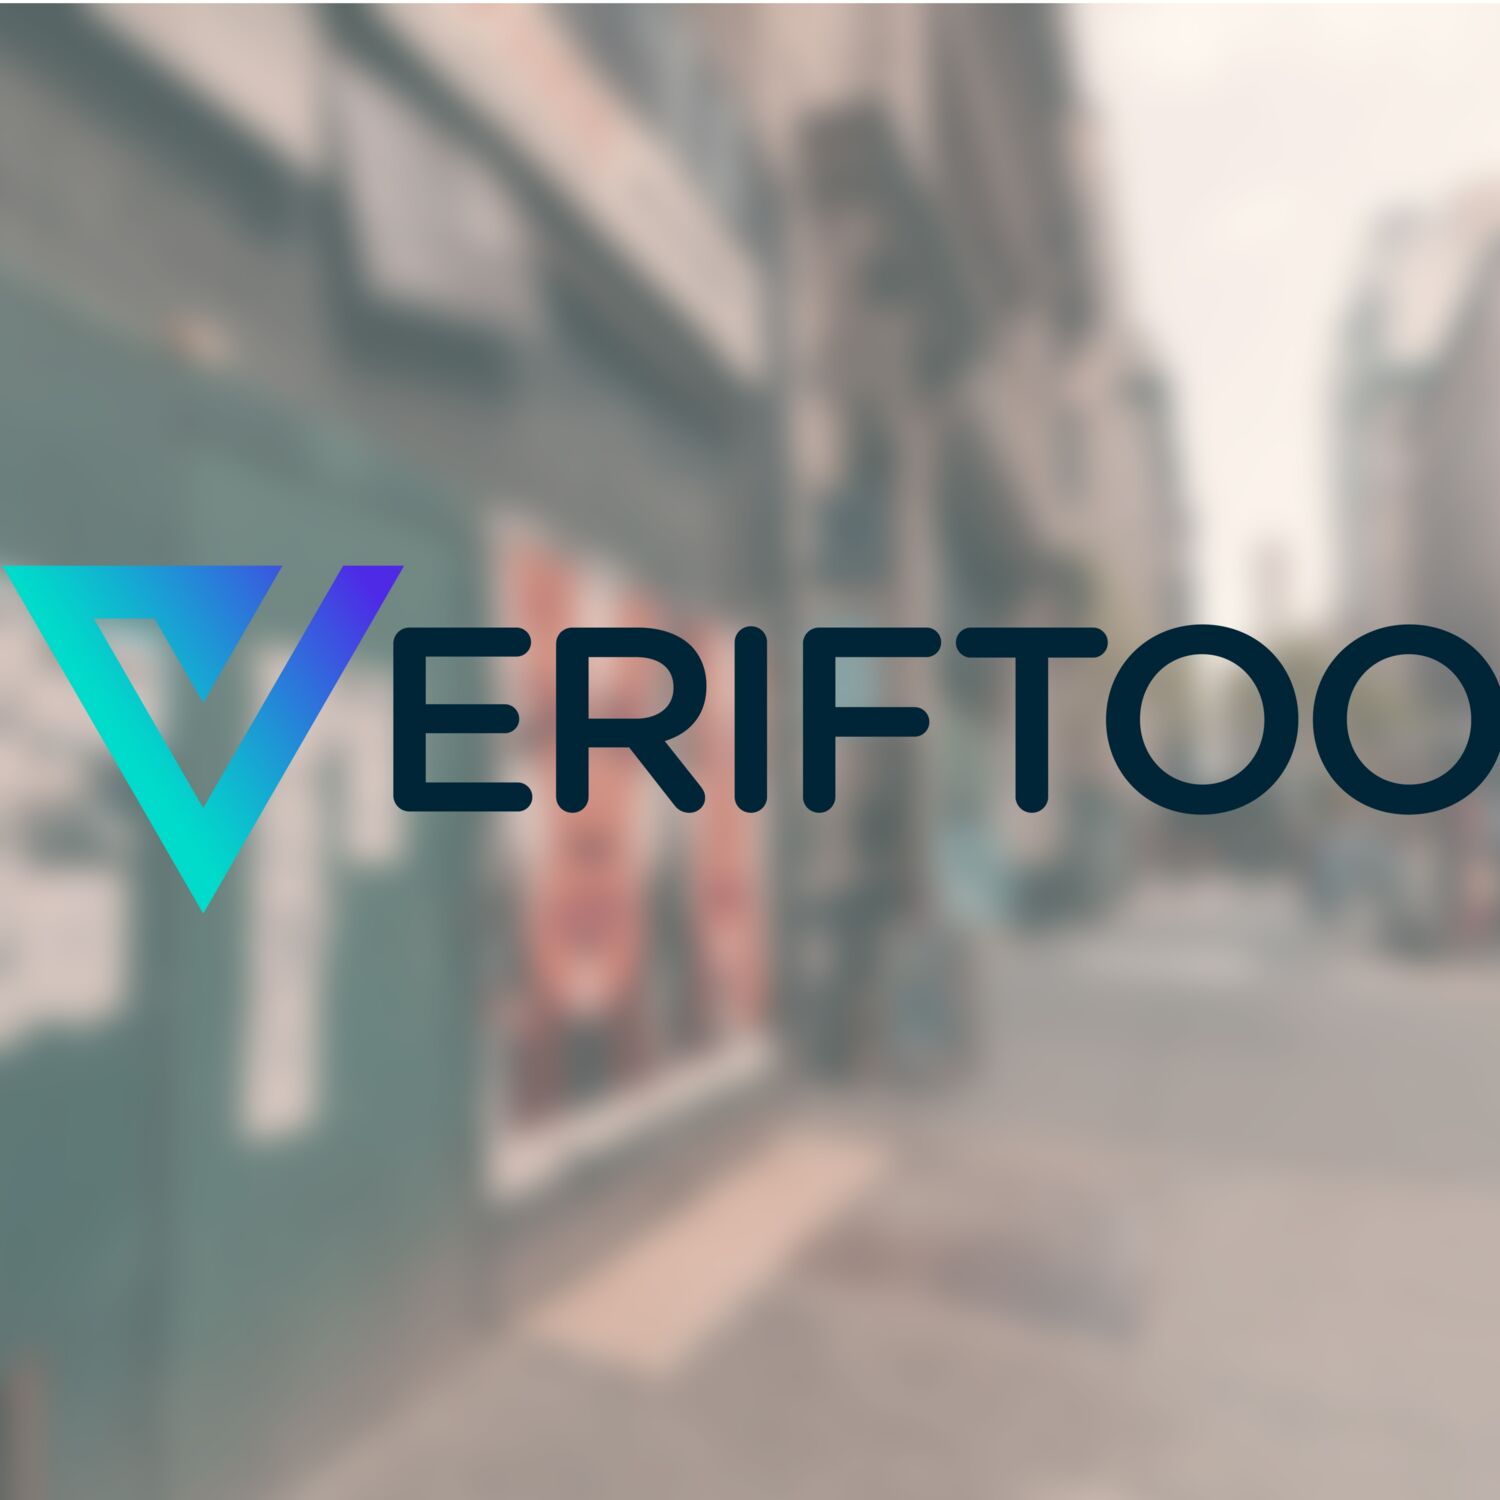 Veriftoo - Une application de vérification